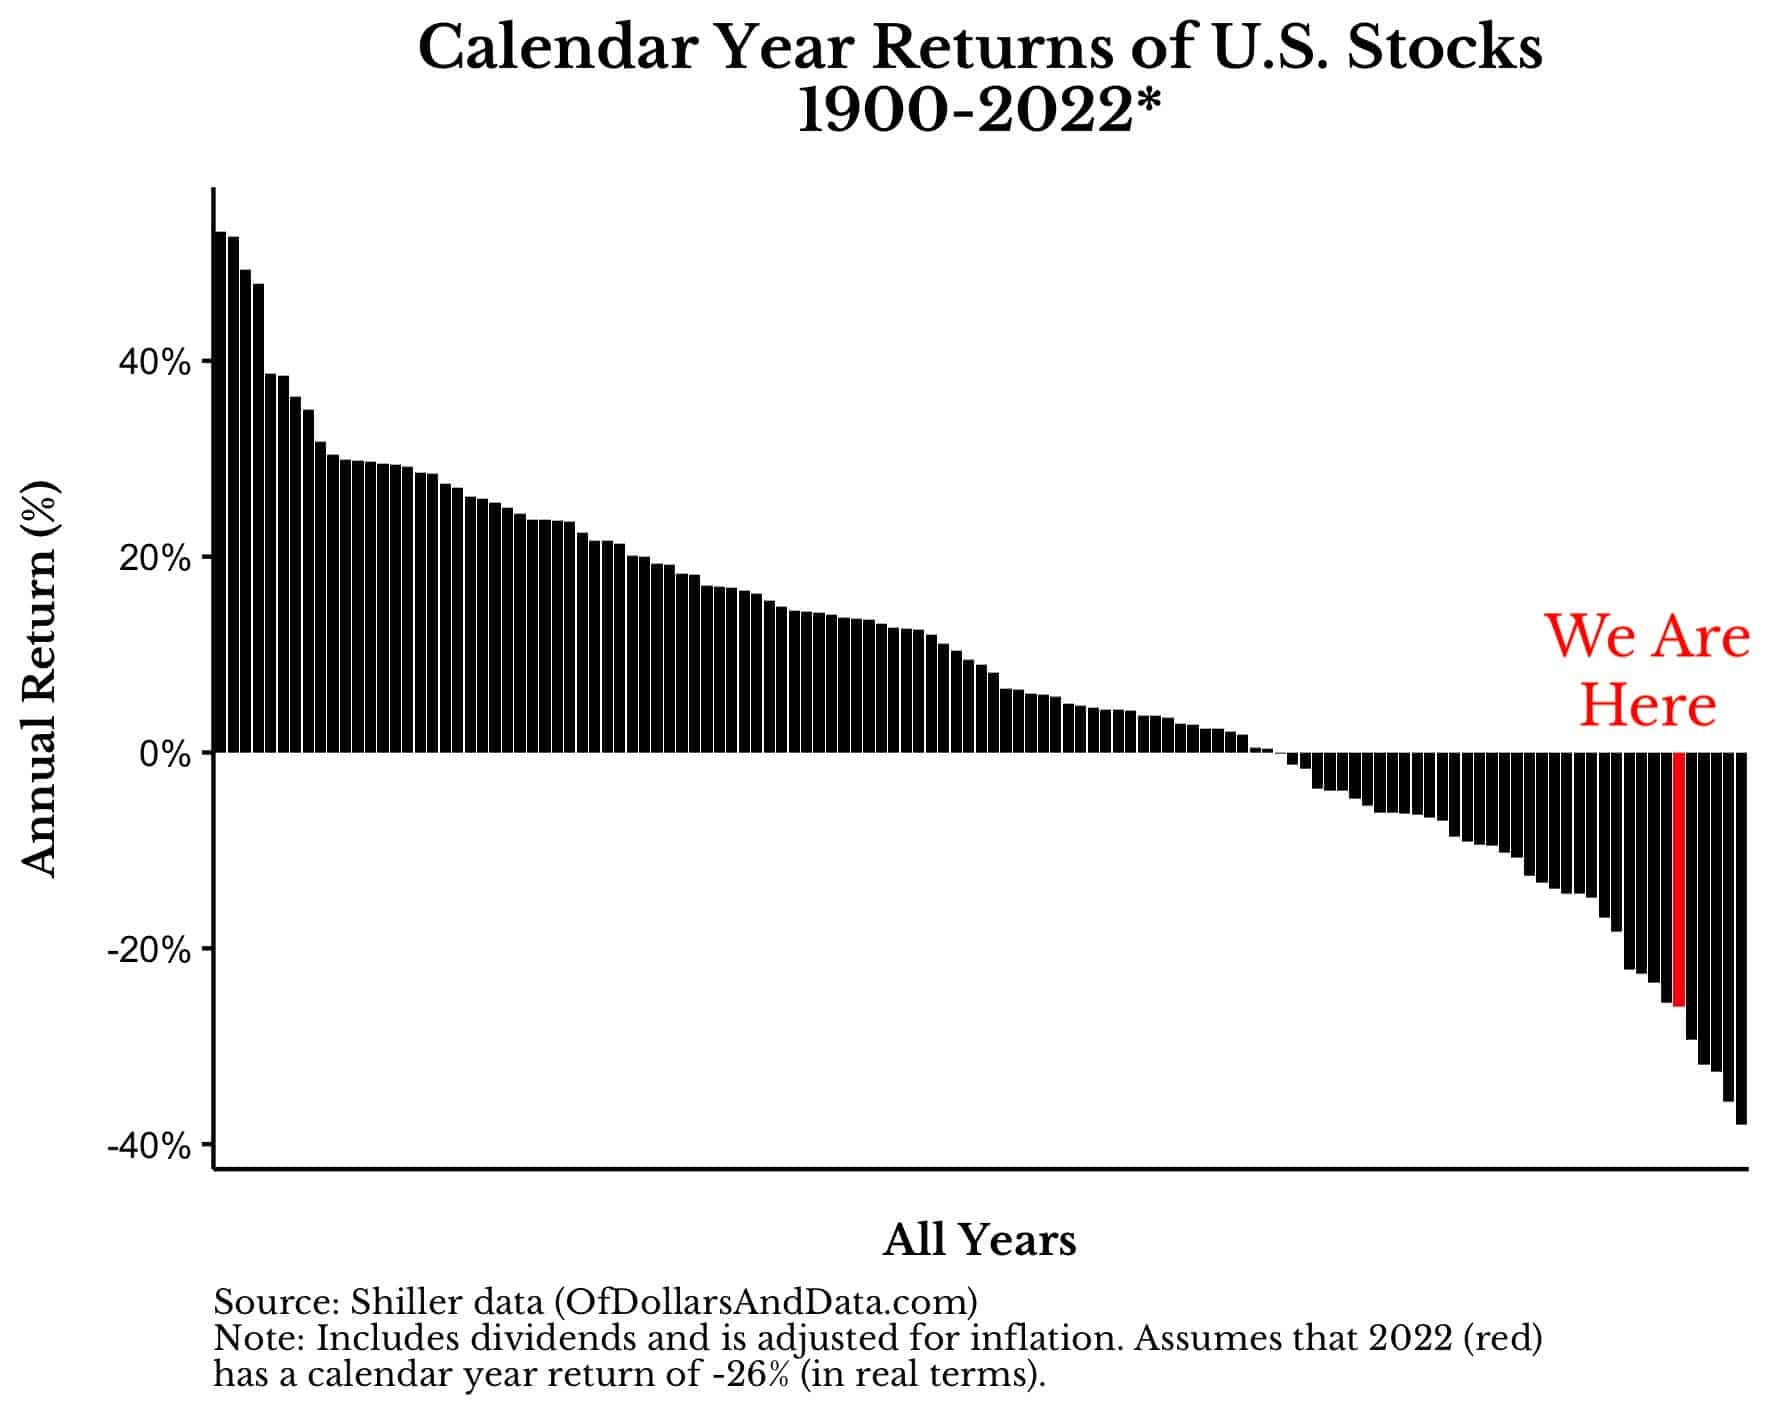 Calendar year US stock returns, 1900-2022